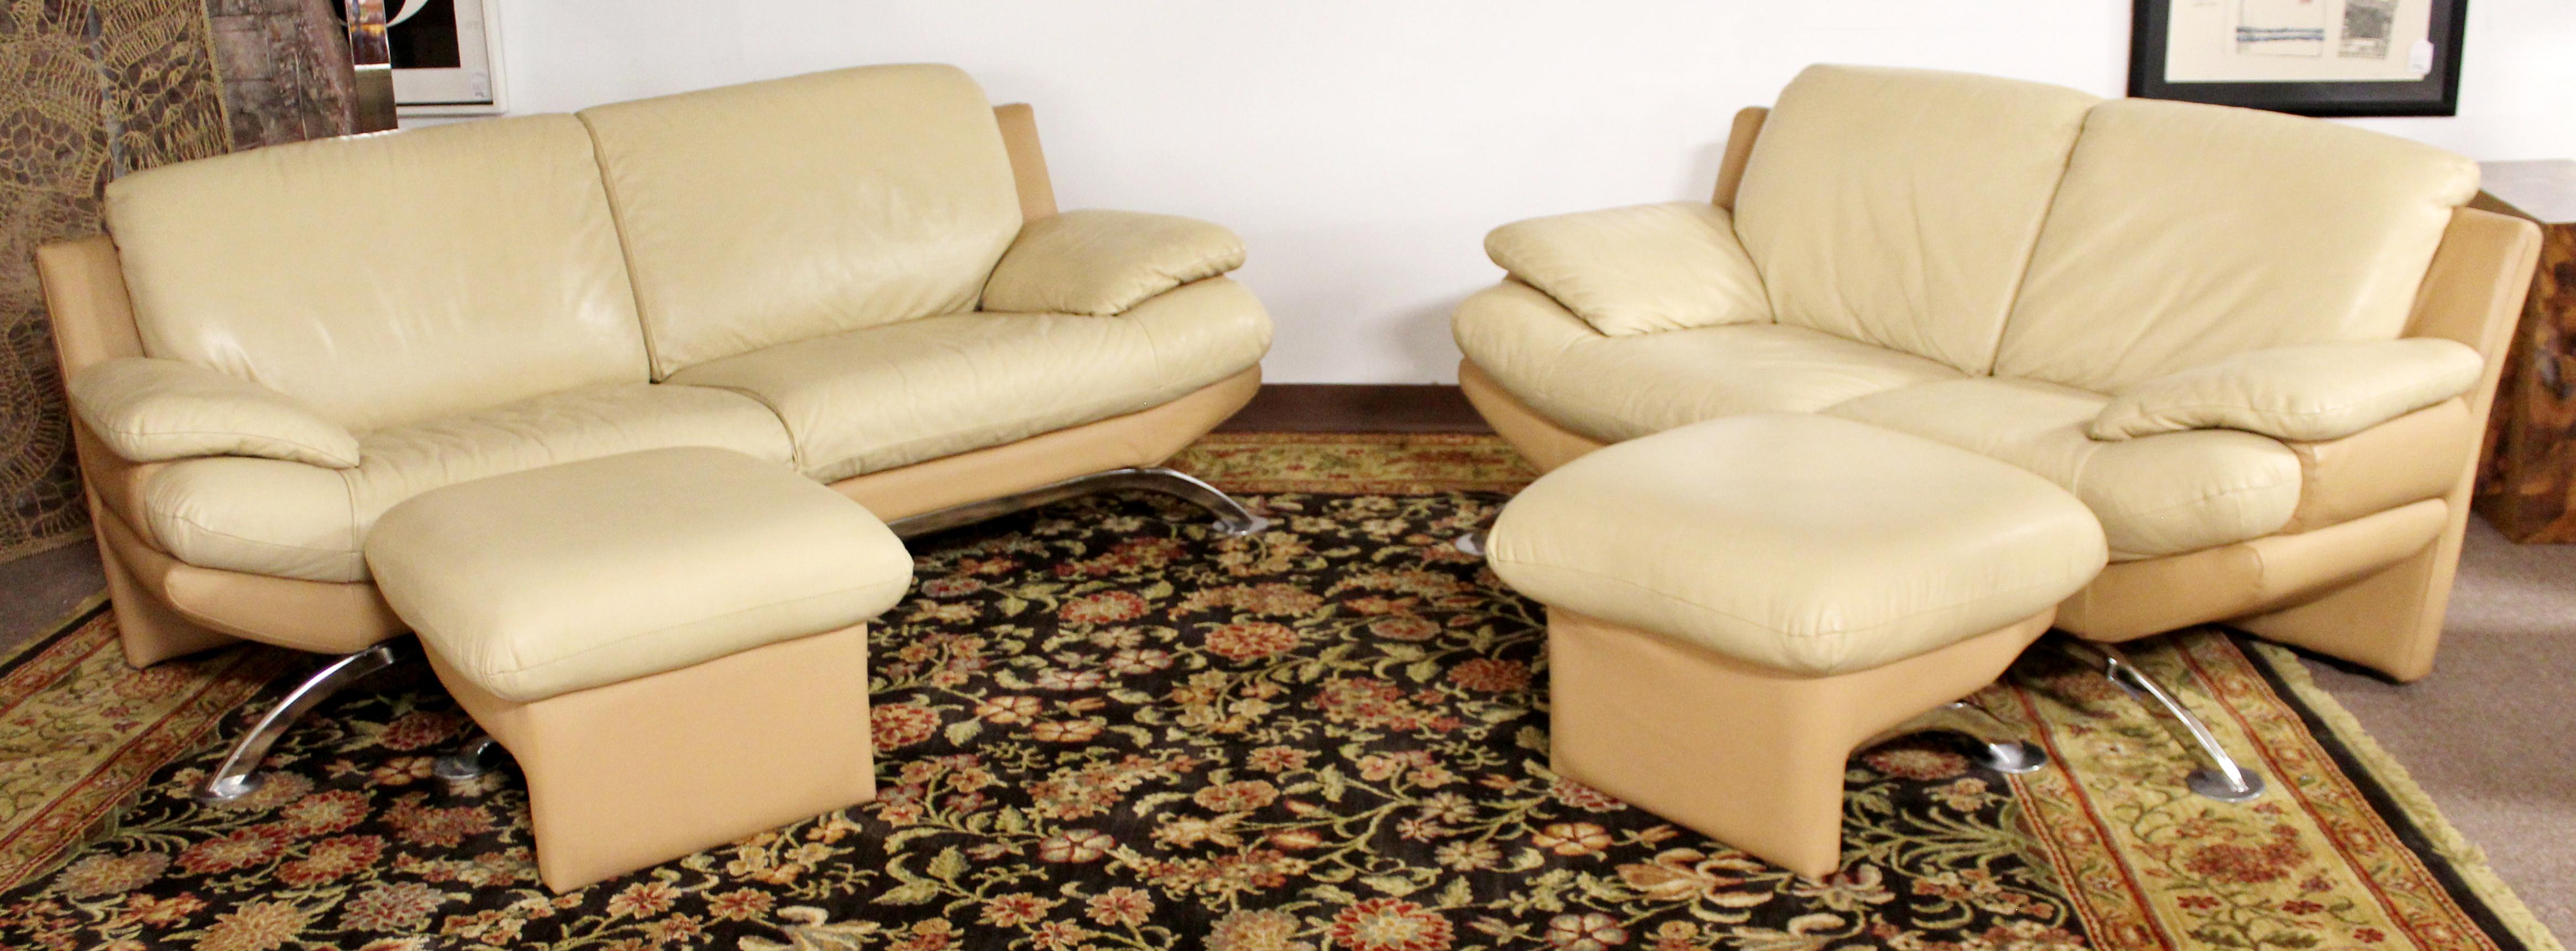 sofa loveseat and ottoman set